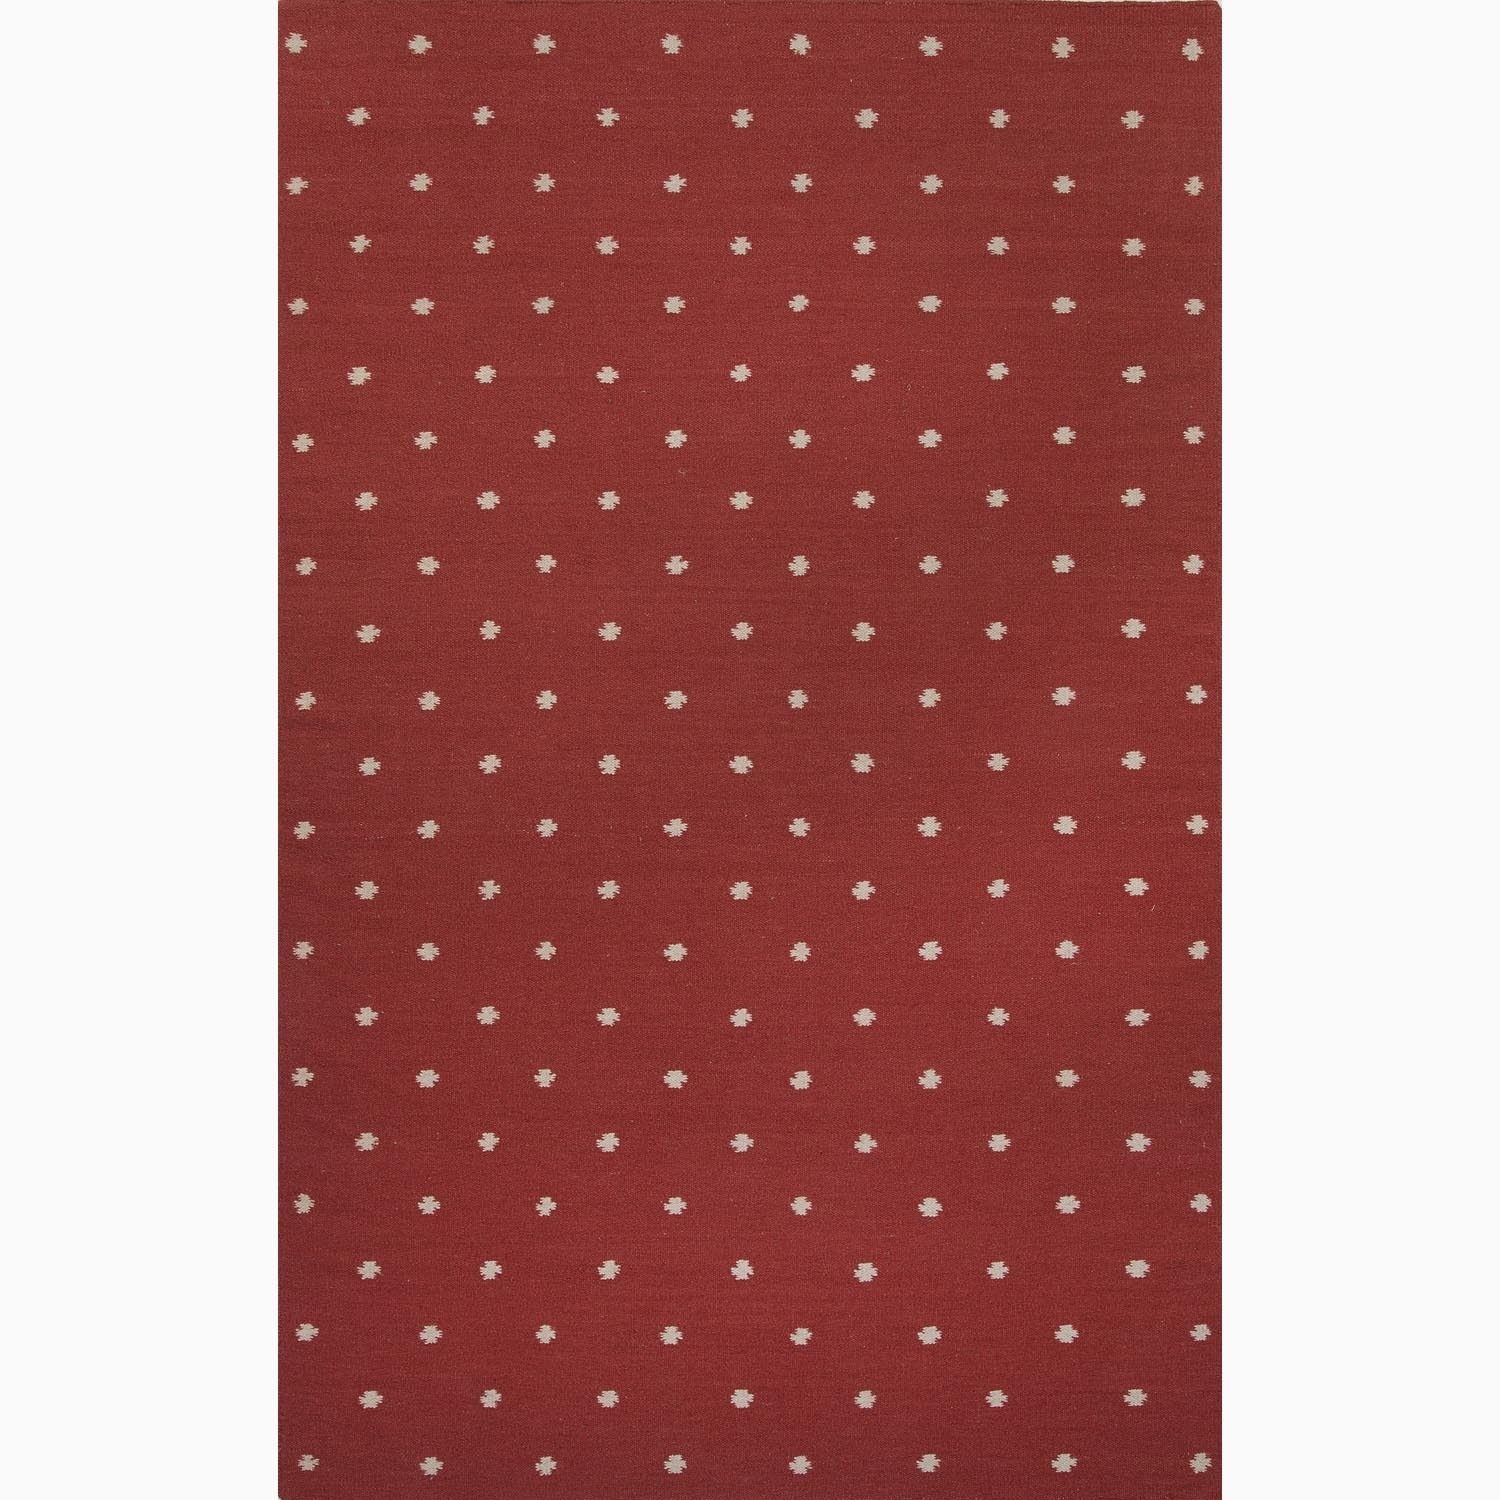 Handmade Contemporary Geometric Pattern Red/ Ivory Wool Area Rug (36 X 56)